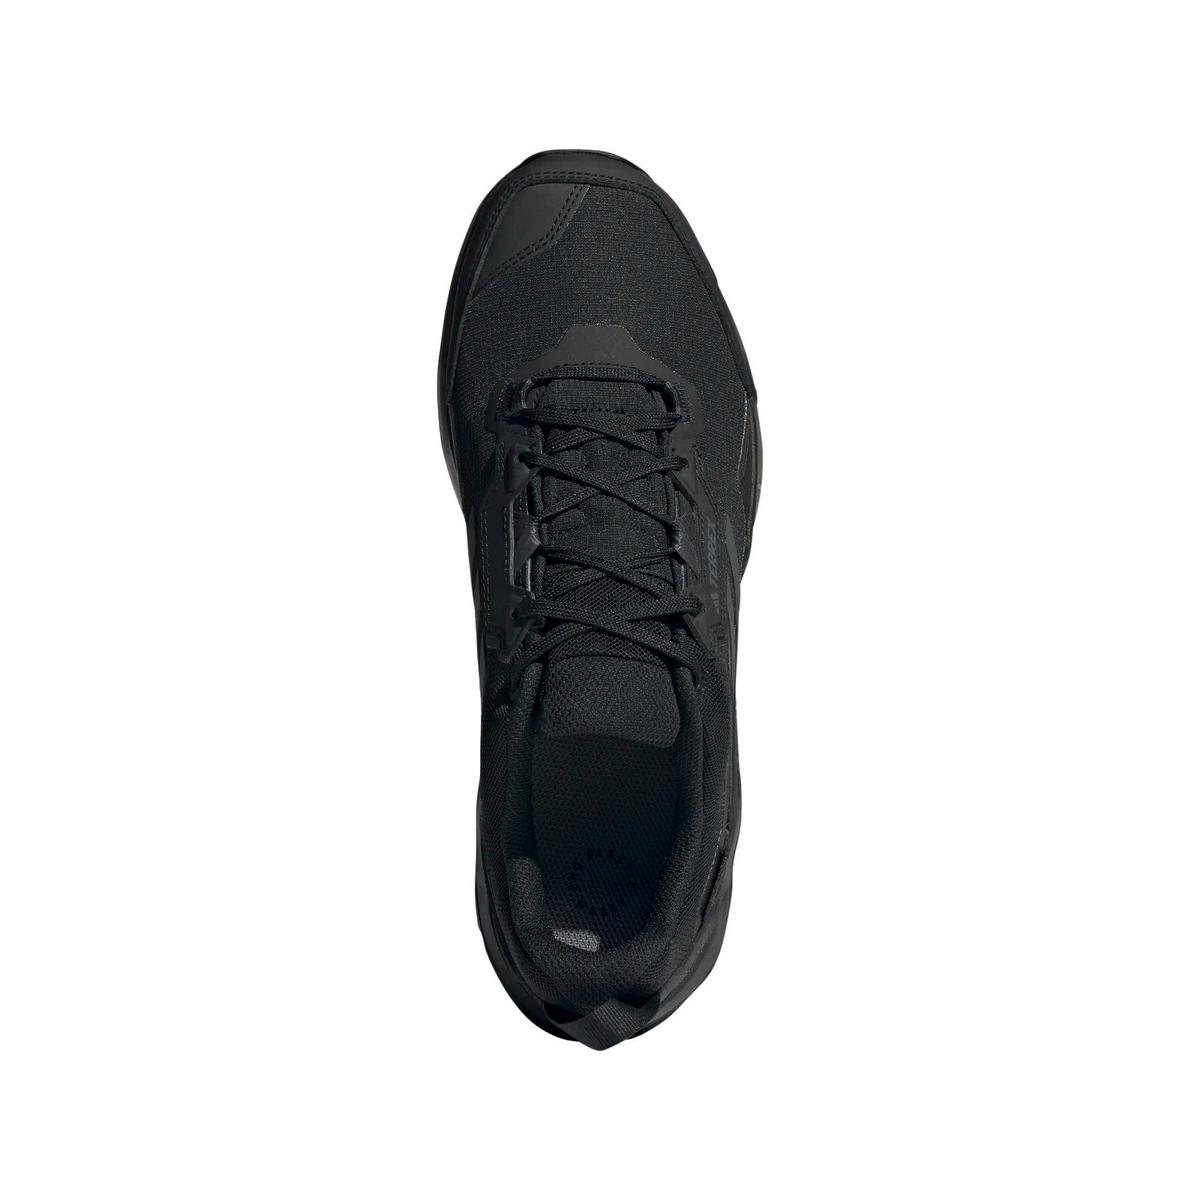 Adidas Terrex Men's Ax4 Gore-Tex Hiking Shoes - Black